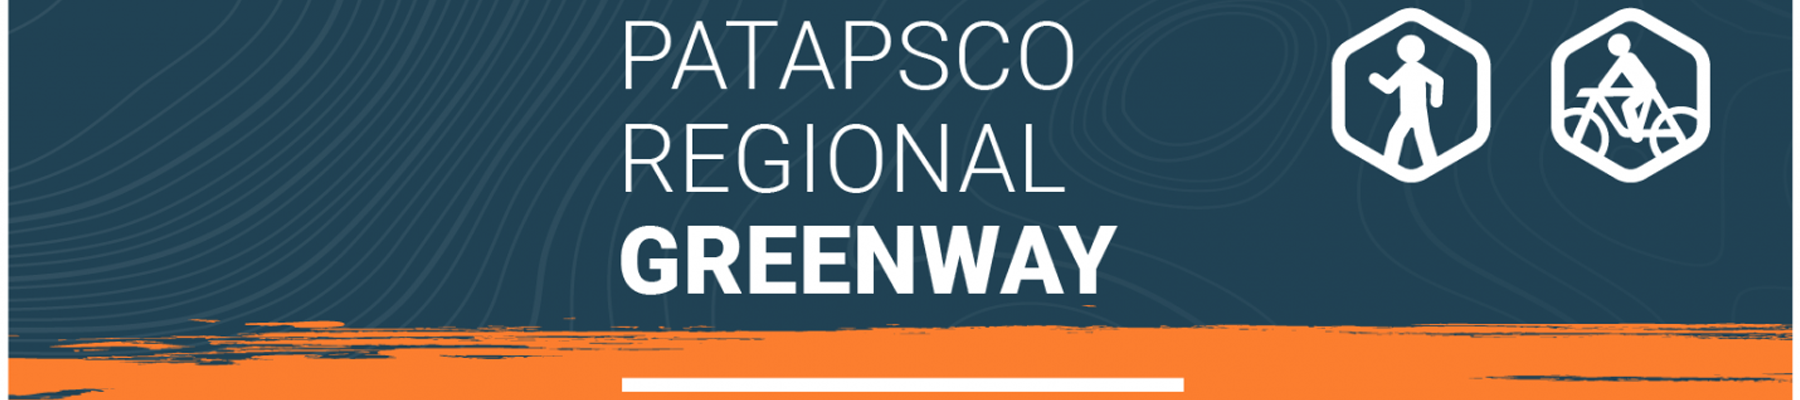 Patapsco Regional Greenway